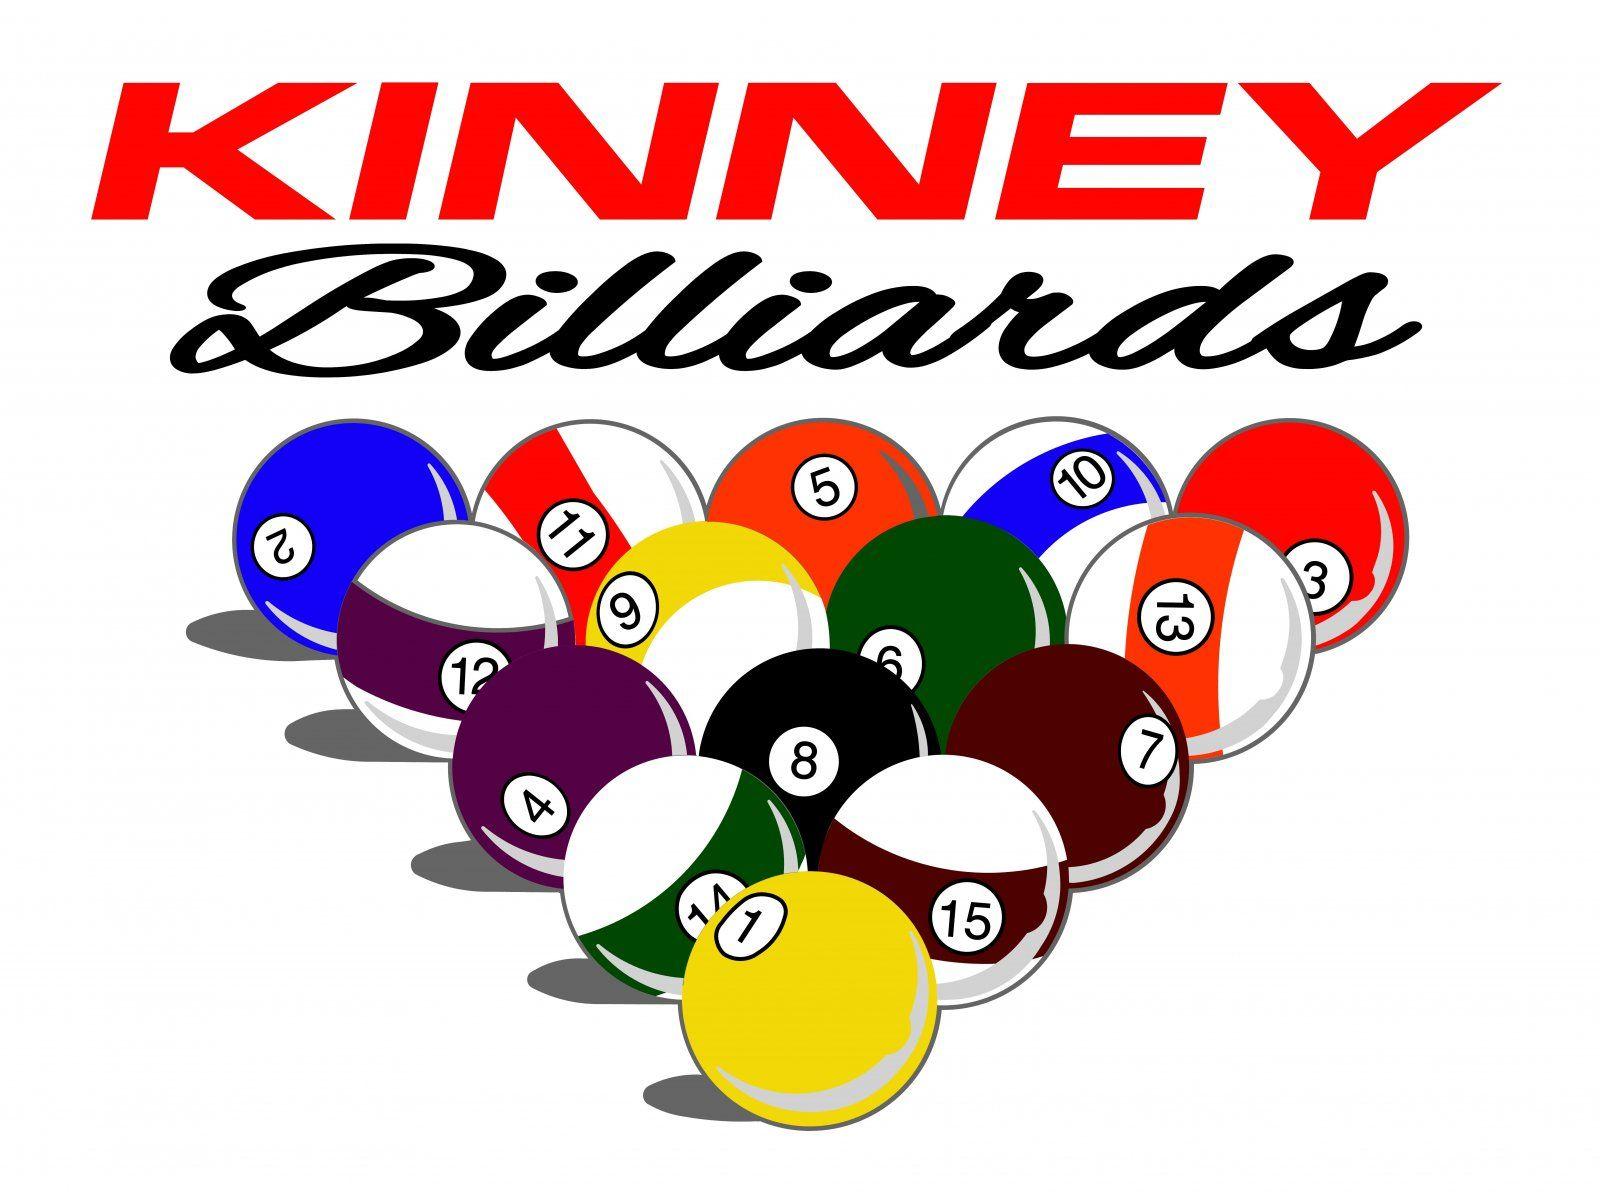 Billiards Logo - Kinney Billiards - logo - Habitat for Humanity